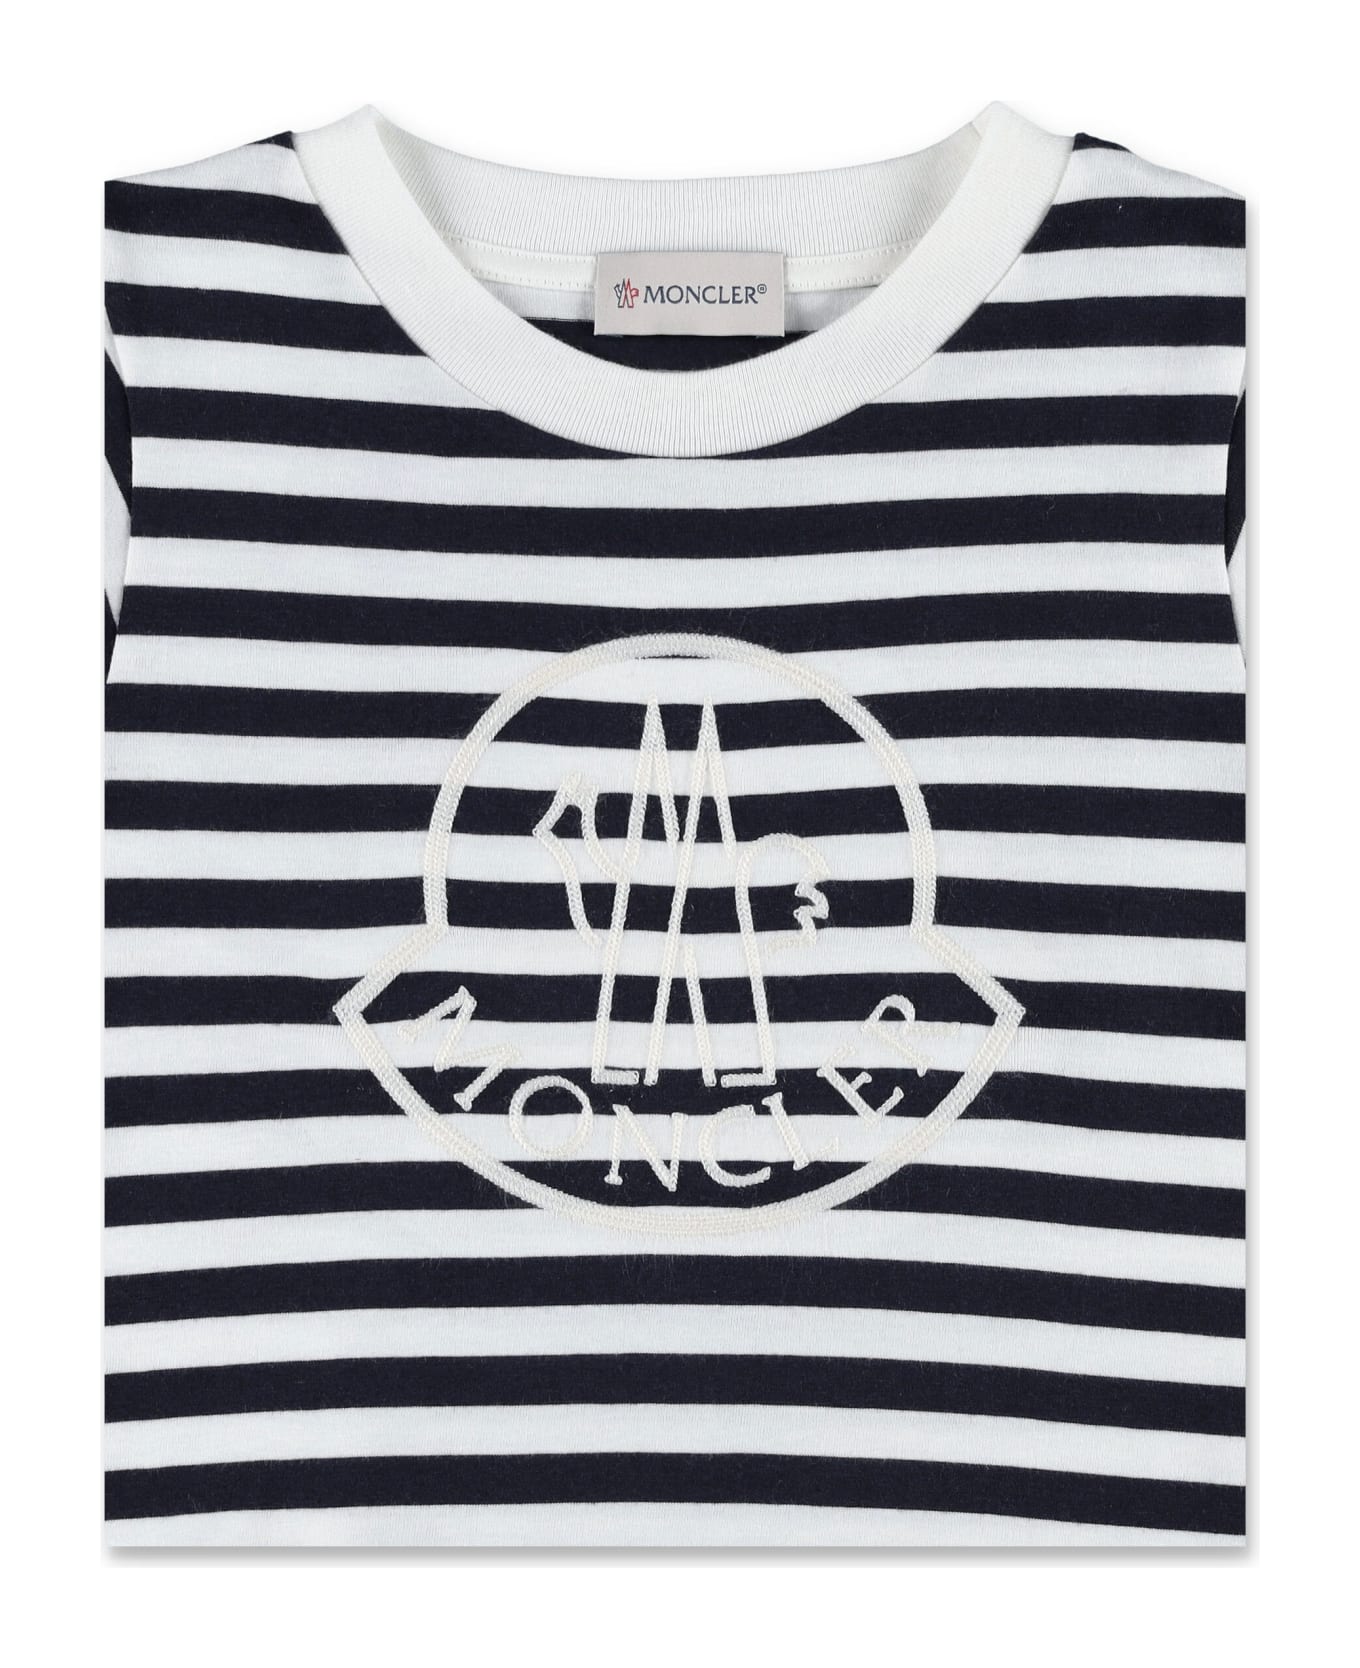 Moncler Stripes T-shirt - WHITE/BLACK